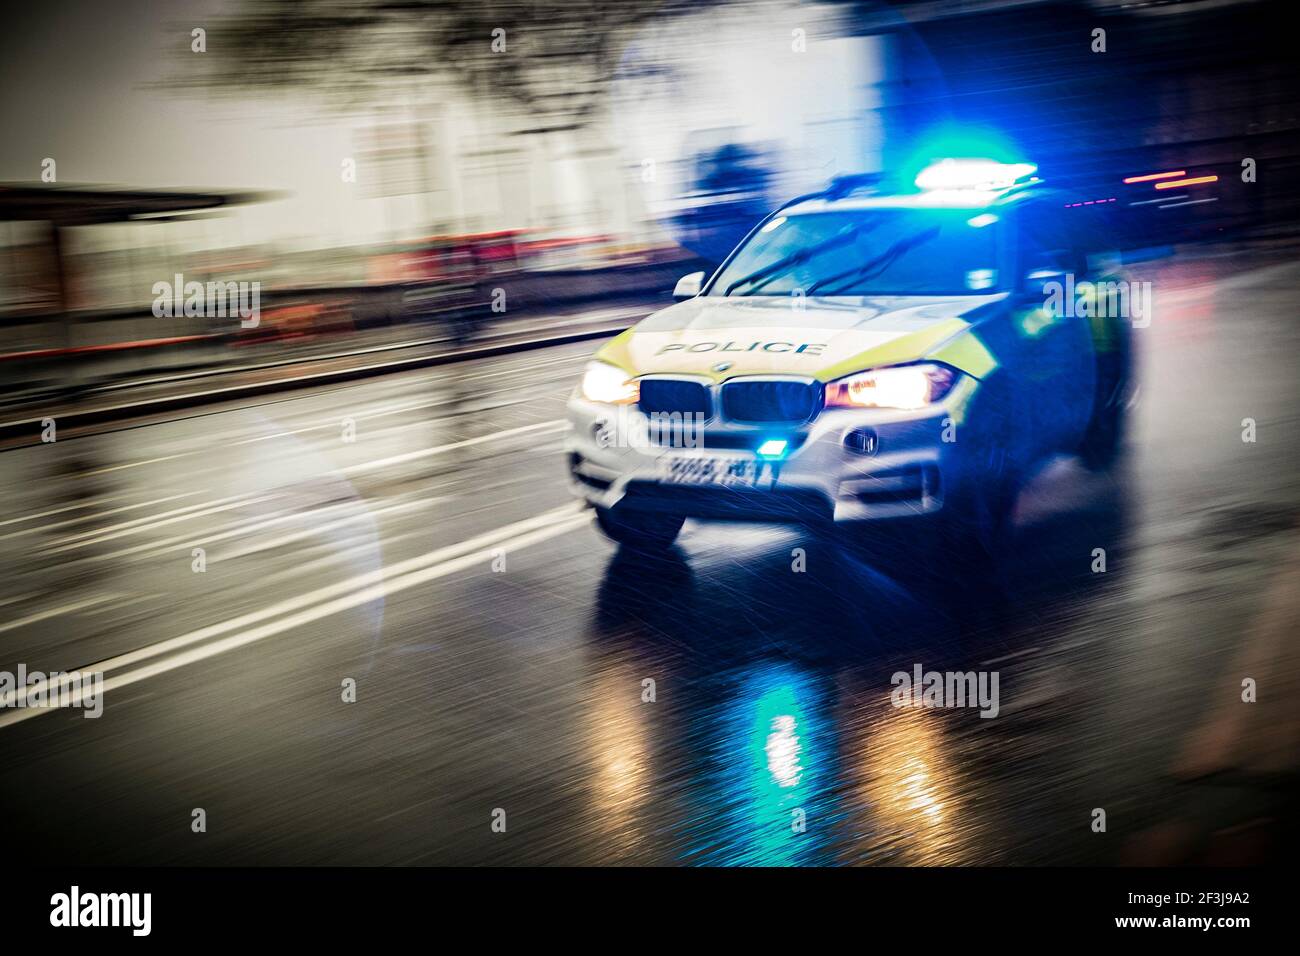 Metropolitan Police BMW X5 Entgegennahme eines Notrufs in Whitehall, London, UK Fotografie von Jason Bye t: 07966 173 930 e: mail@jasonbye.com w: http://www.jasonbye.com Stockfoto